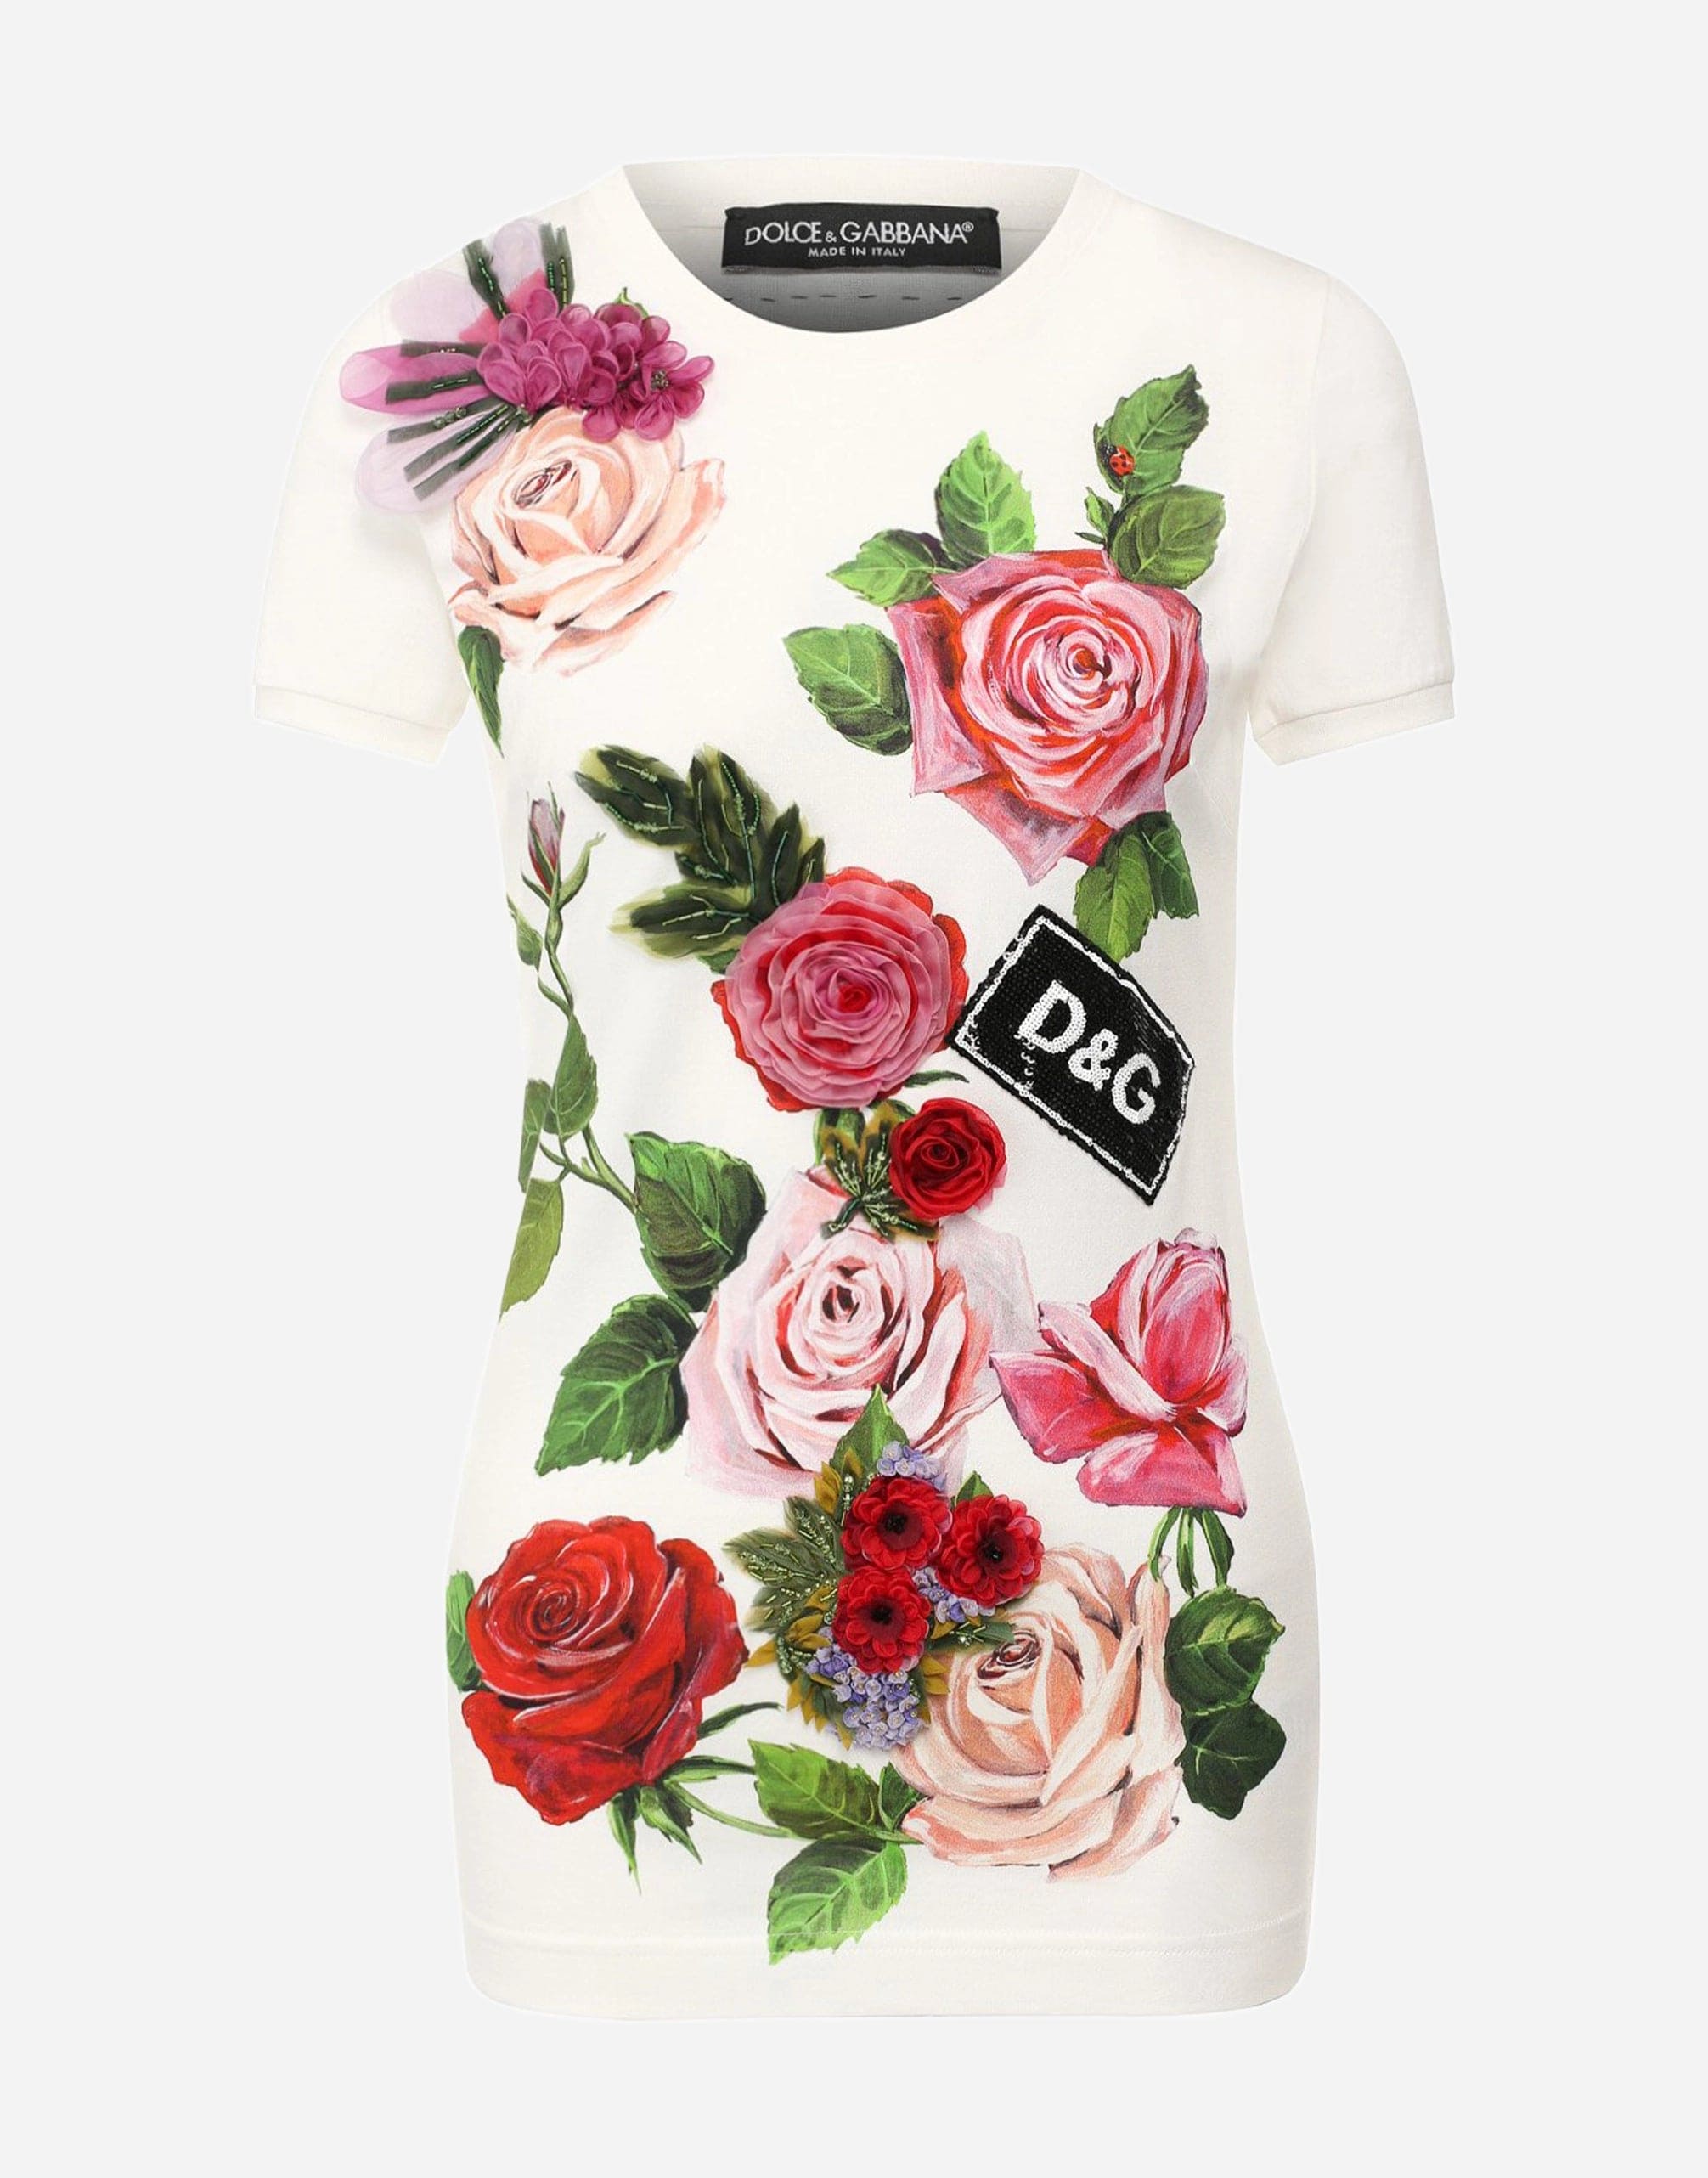 Dolce & Gabbana Printed Cotton Floral T-Shirt